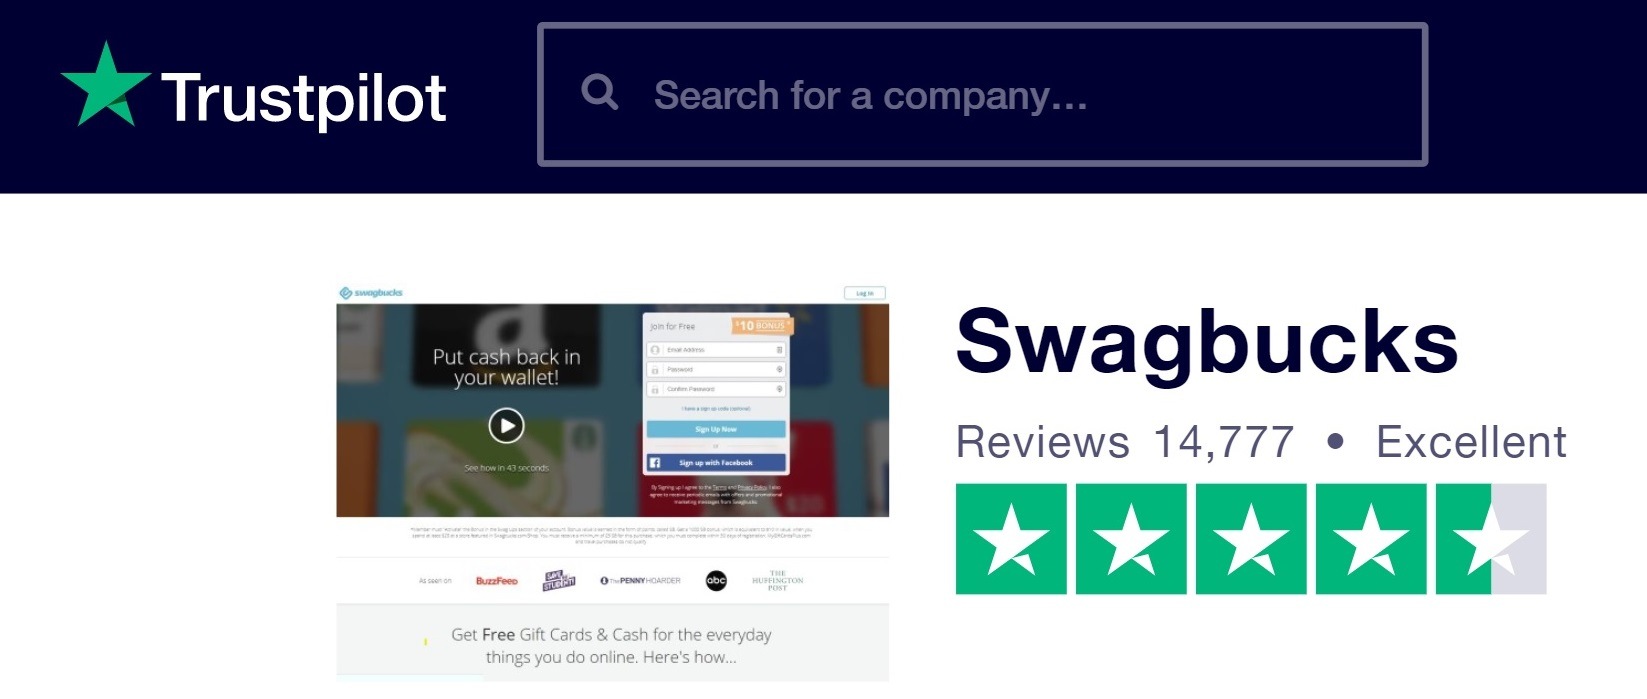 Is Swagbucks scam - Swabucks rating at trustpilot